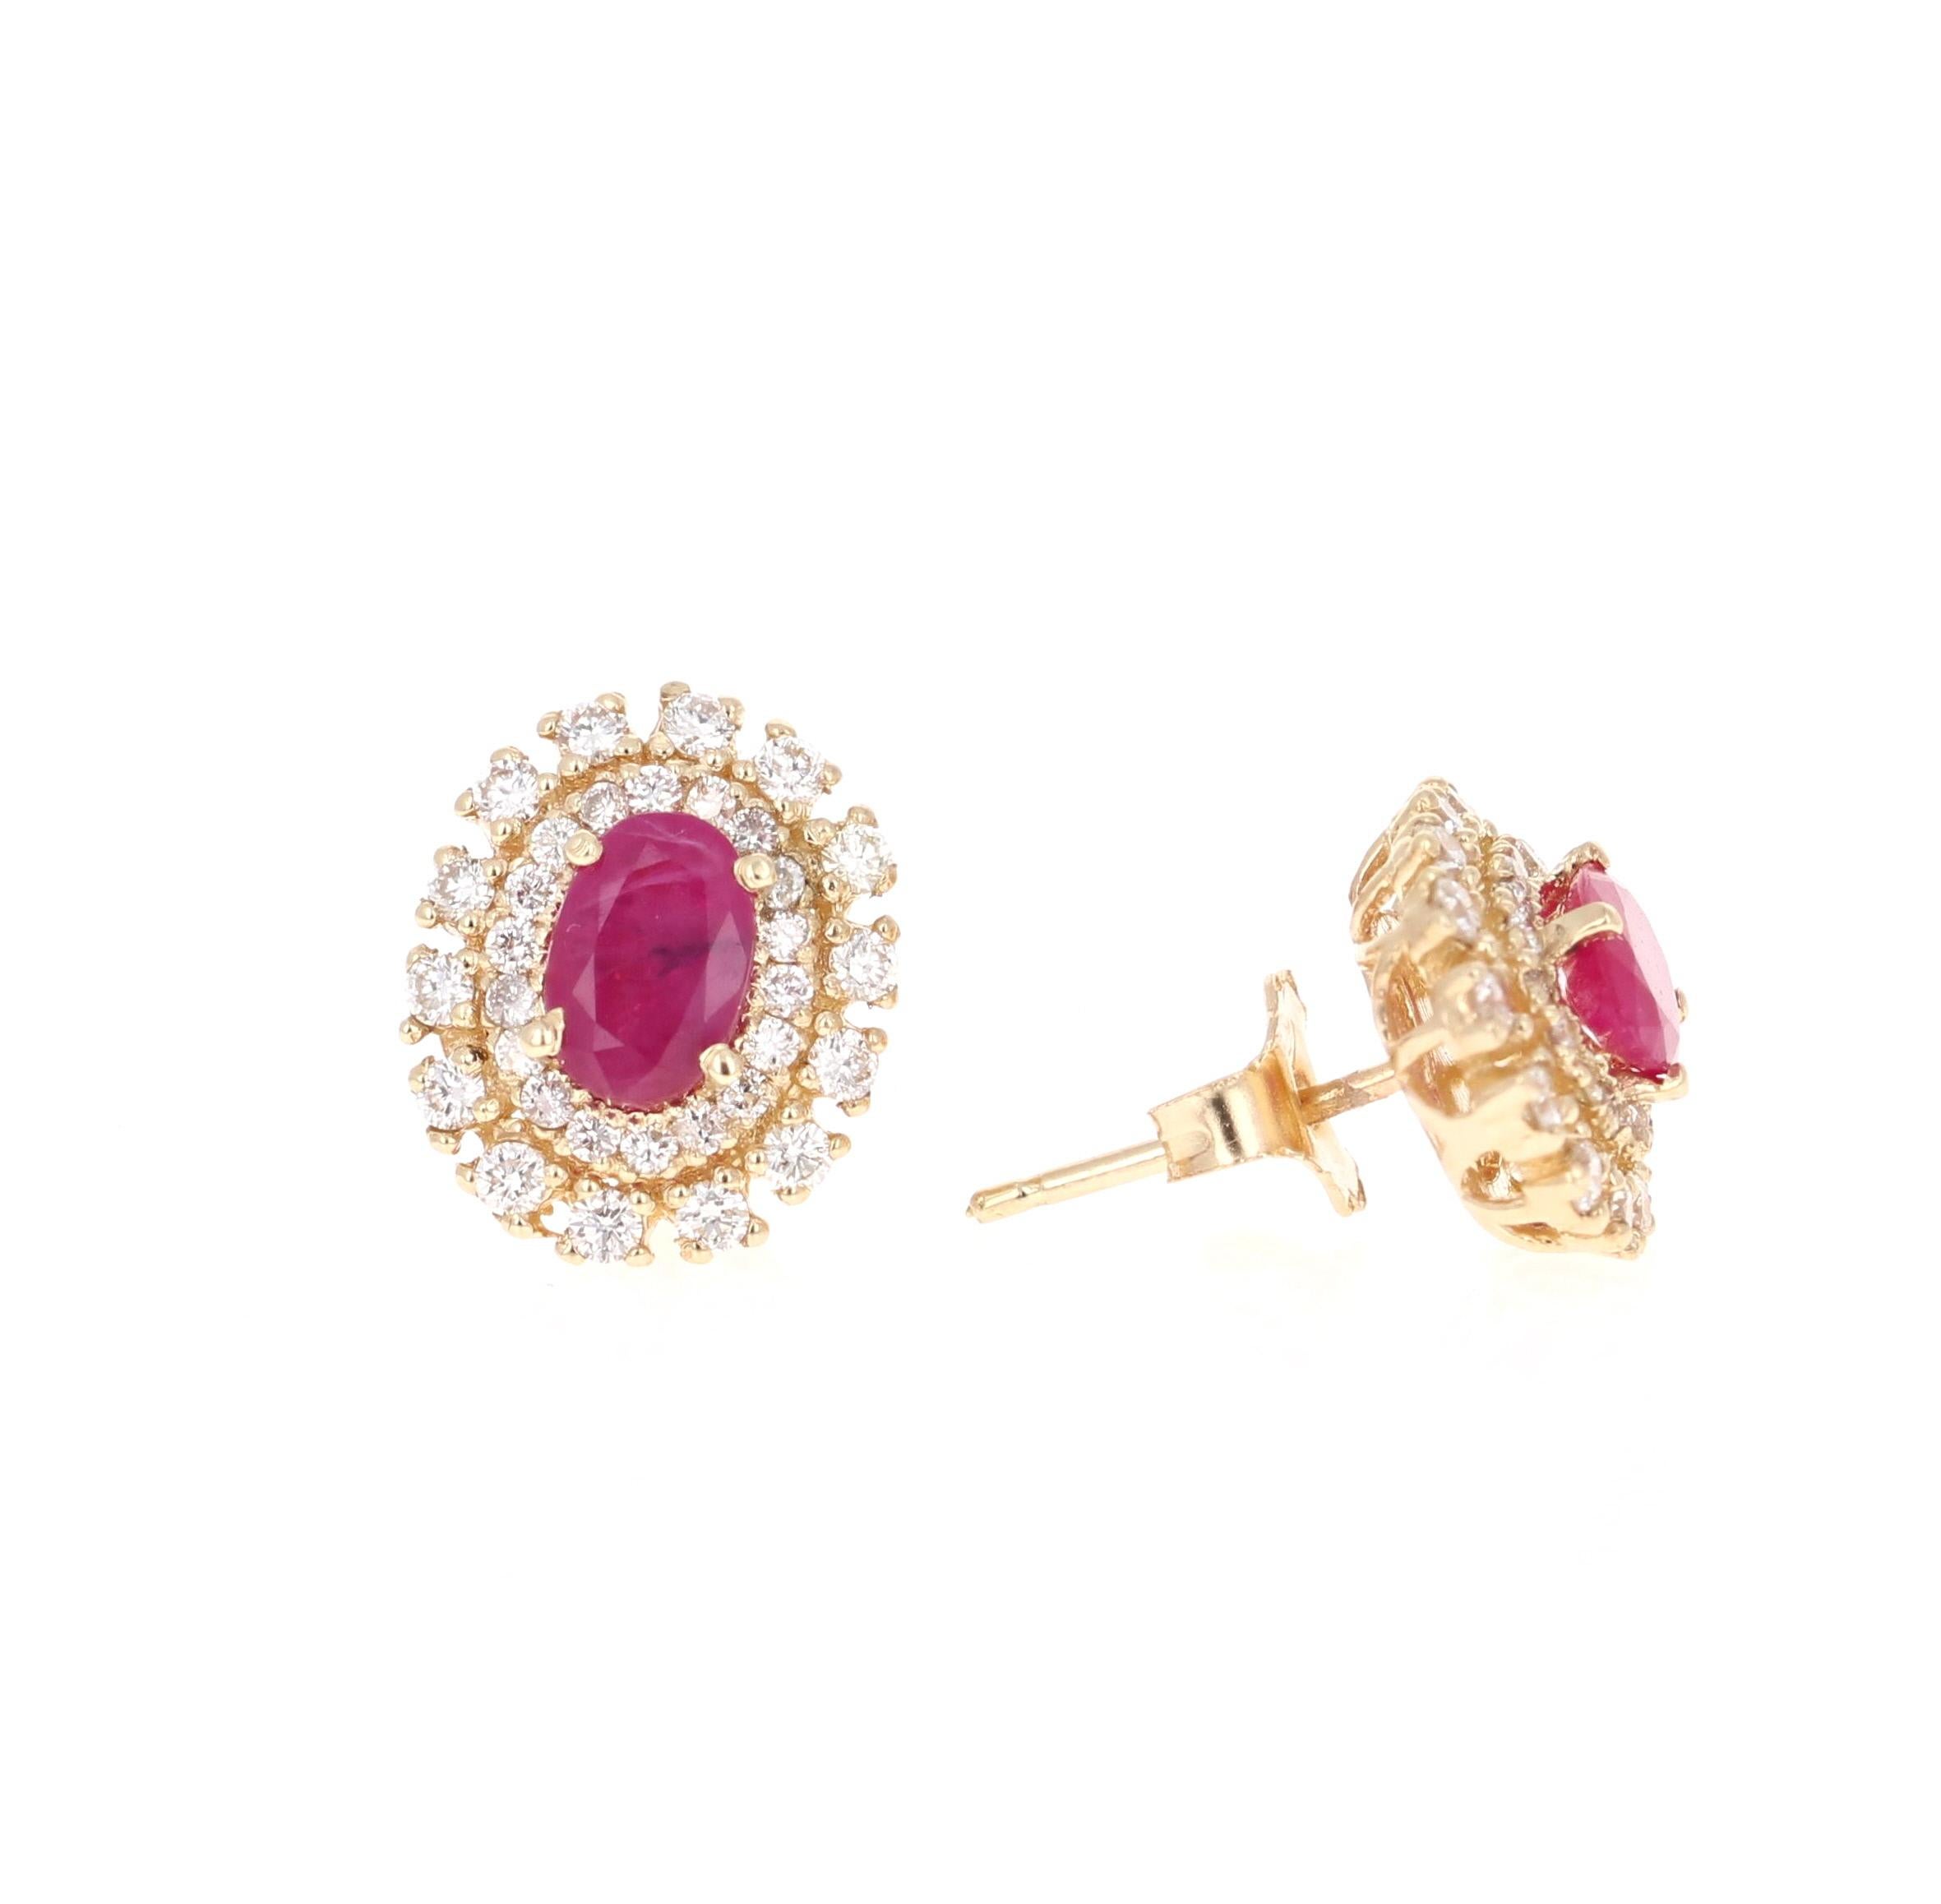 Victorian 1.91 Carat Ruby Diamond 14 Karat Yellow Gold Earring Studs